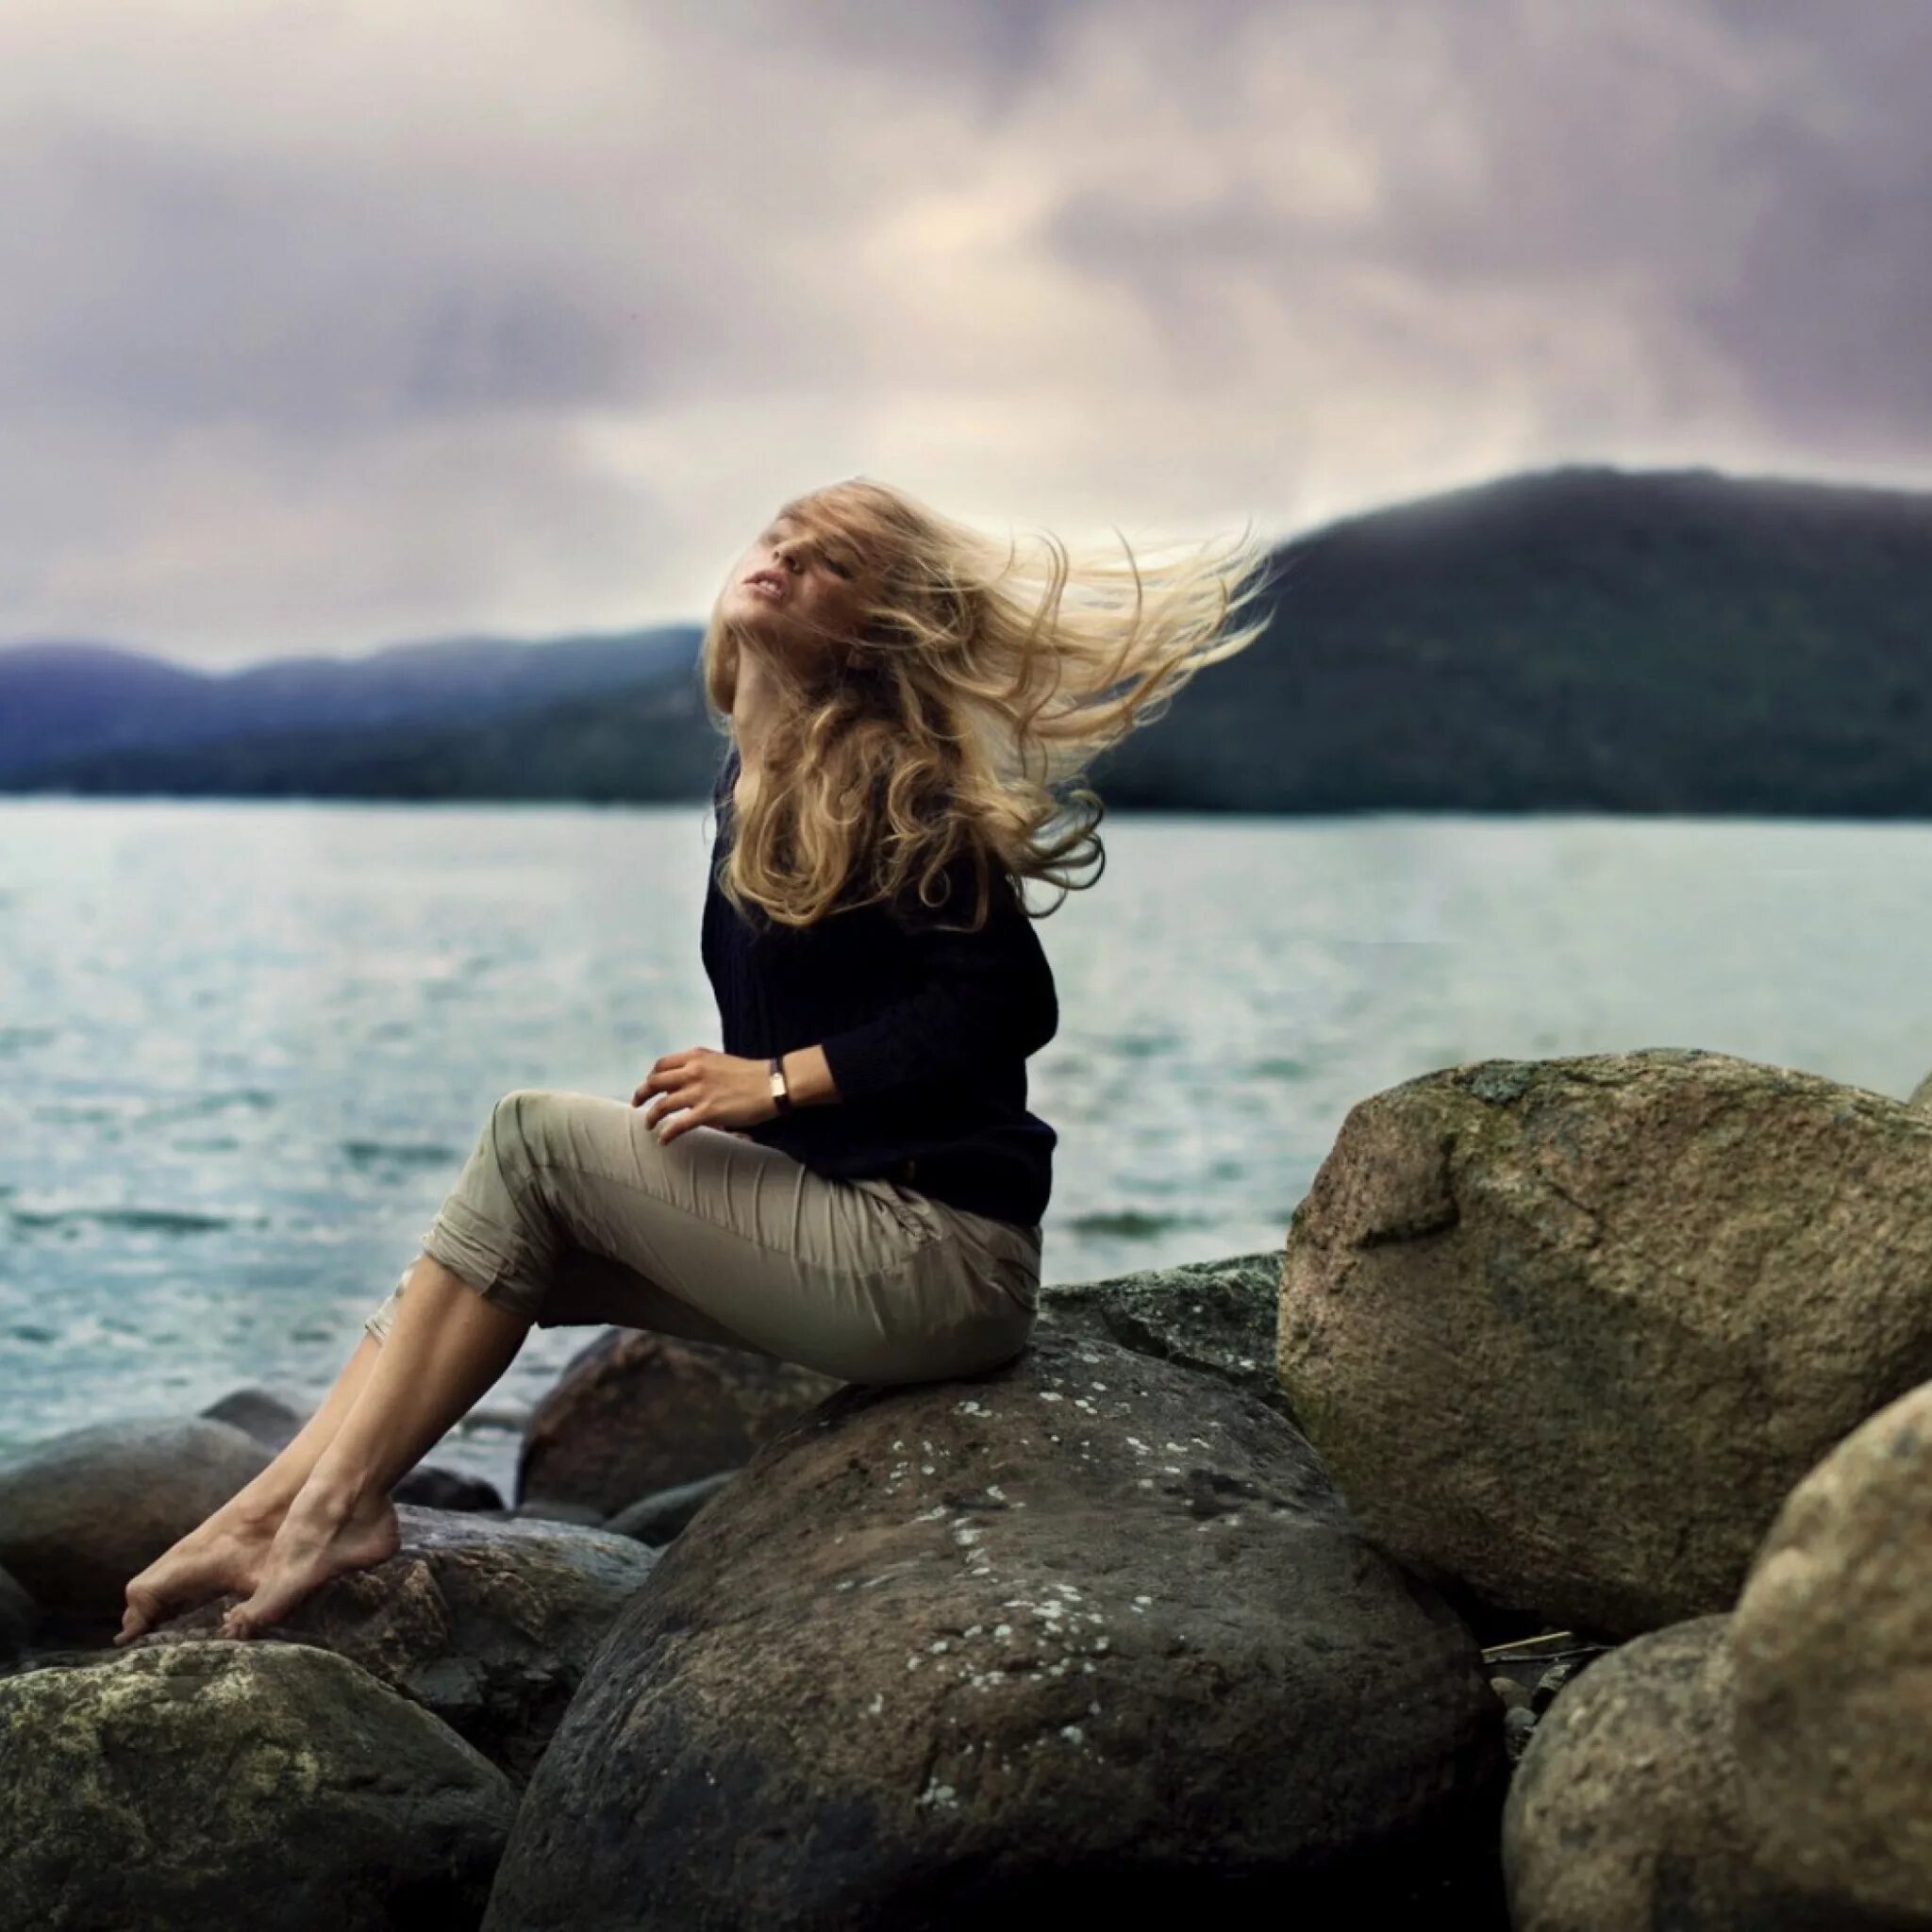 Stone woman. Девушка-море. Девушка сидит на камнях у моря. Девушка сидит на берегу. Девушка на скале.